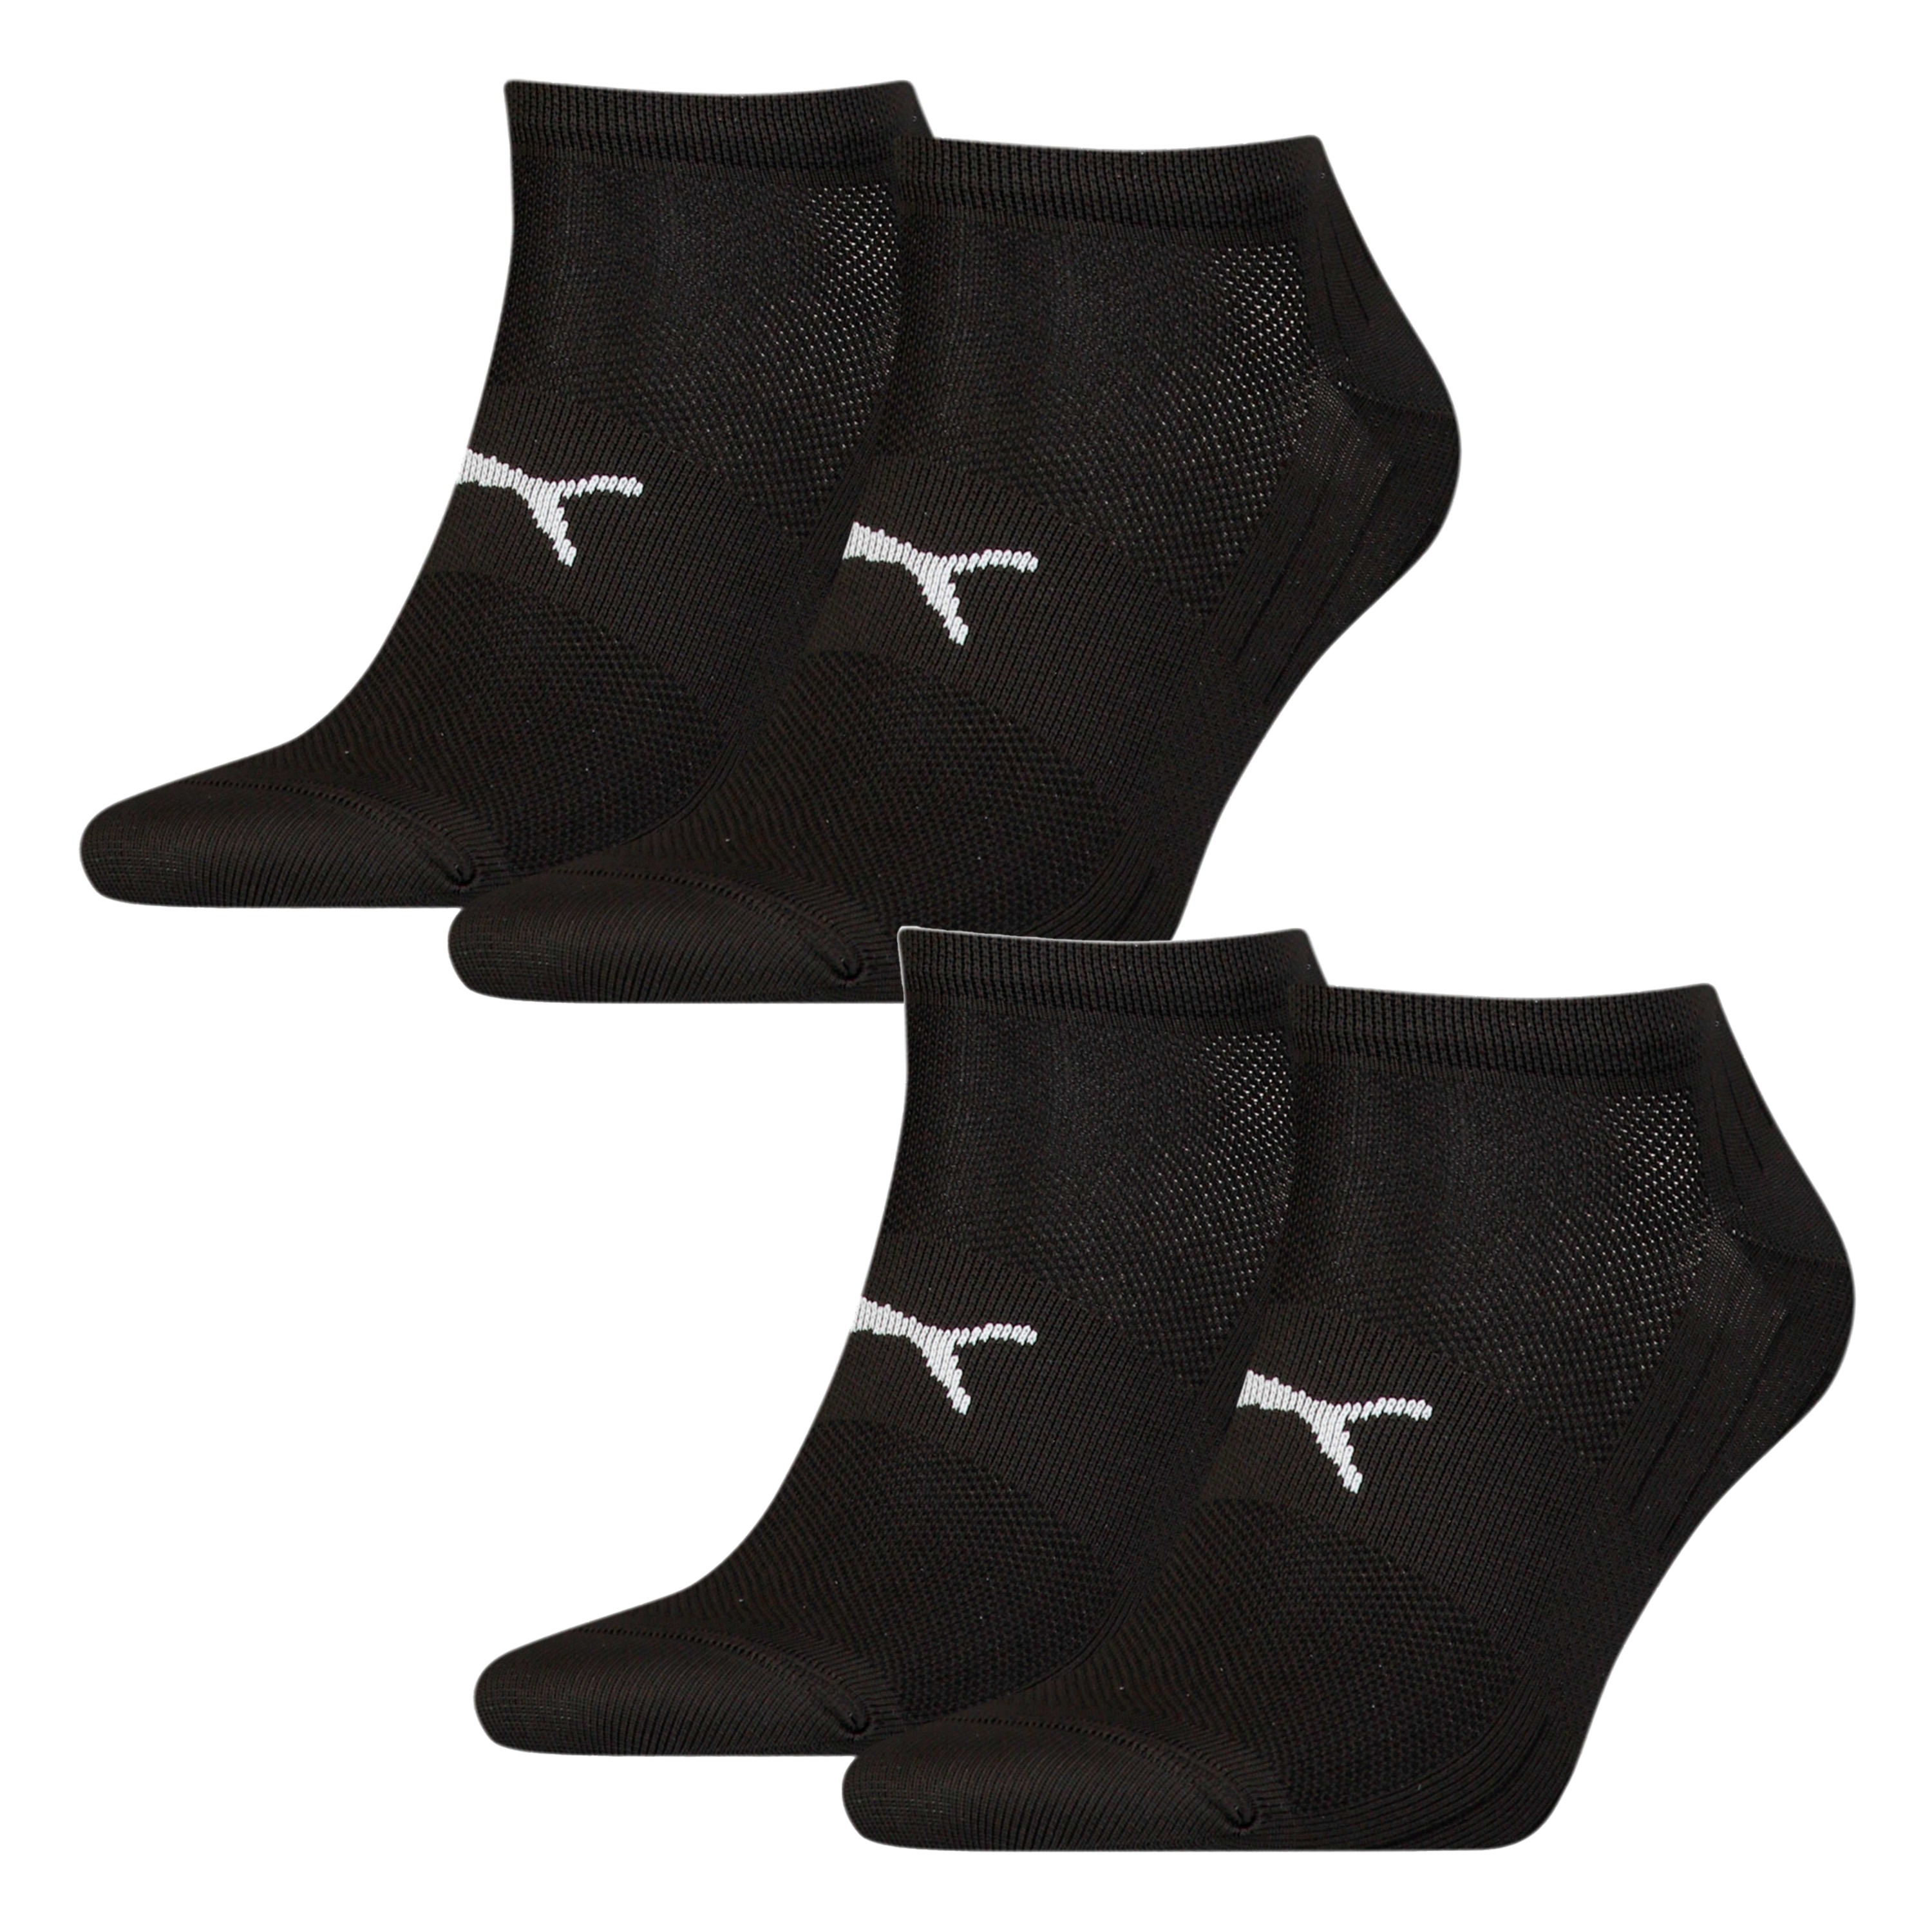 pairs of PUMA lightweight sports socks - Packs for...